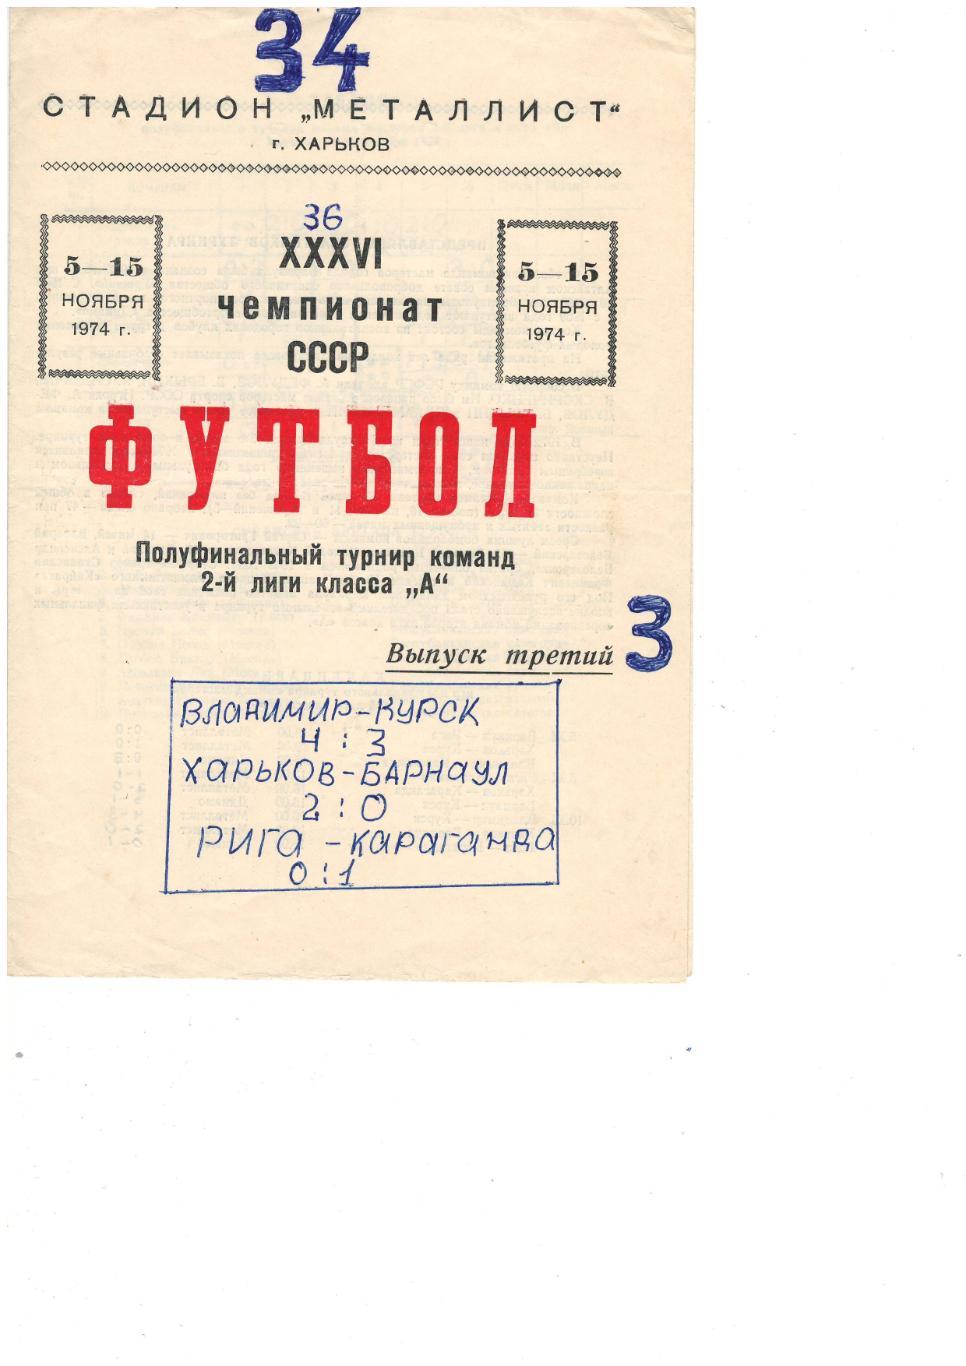 Металлист Харьков - Динамо Барнаул 5-15.11.1974 полуфинальный турнир